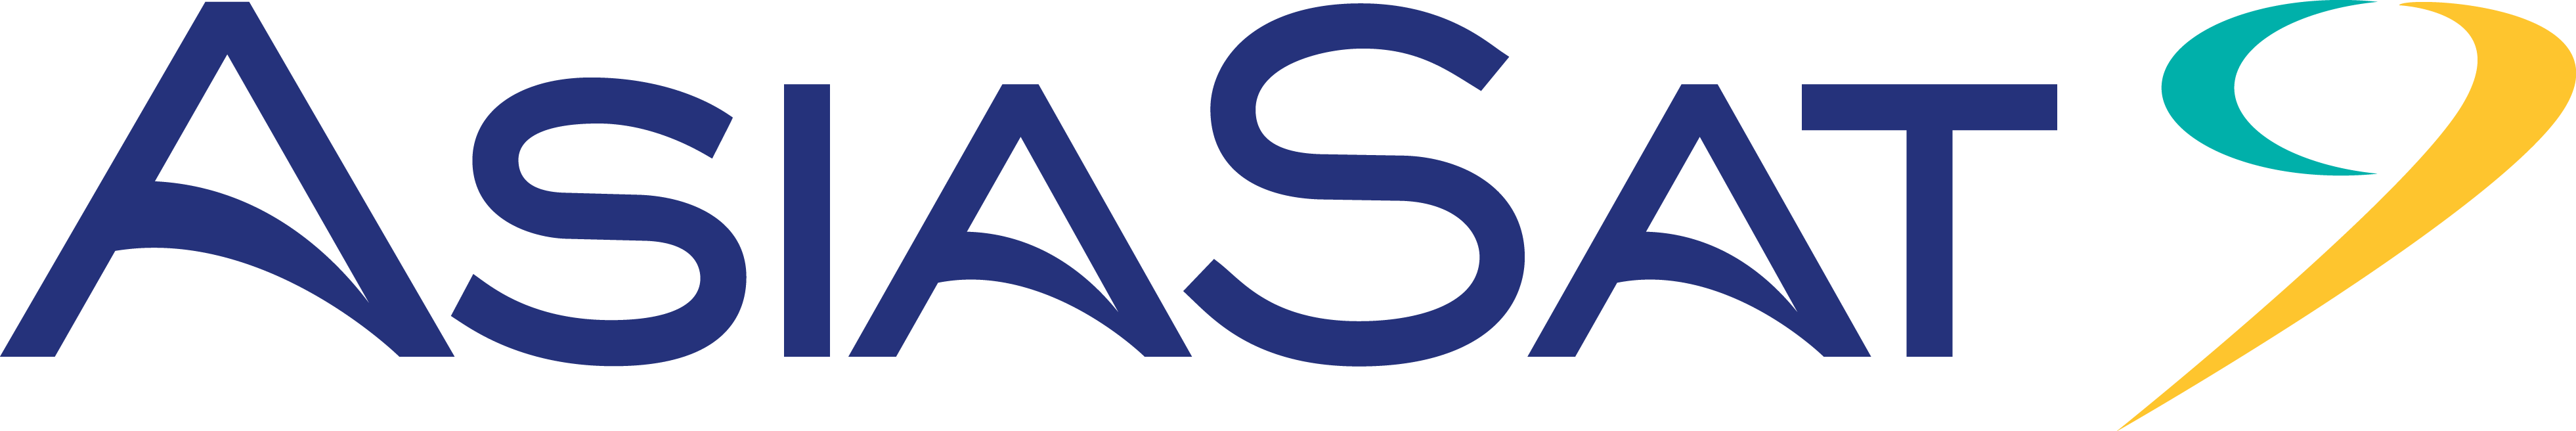 AsiaSat 9 logo